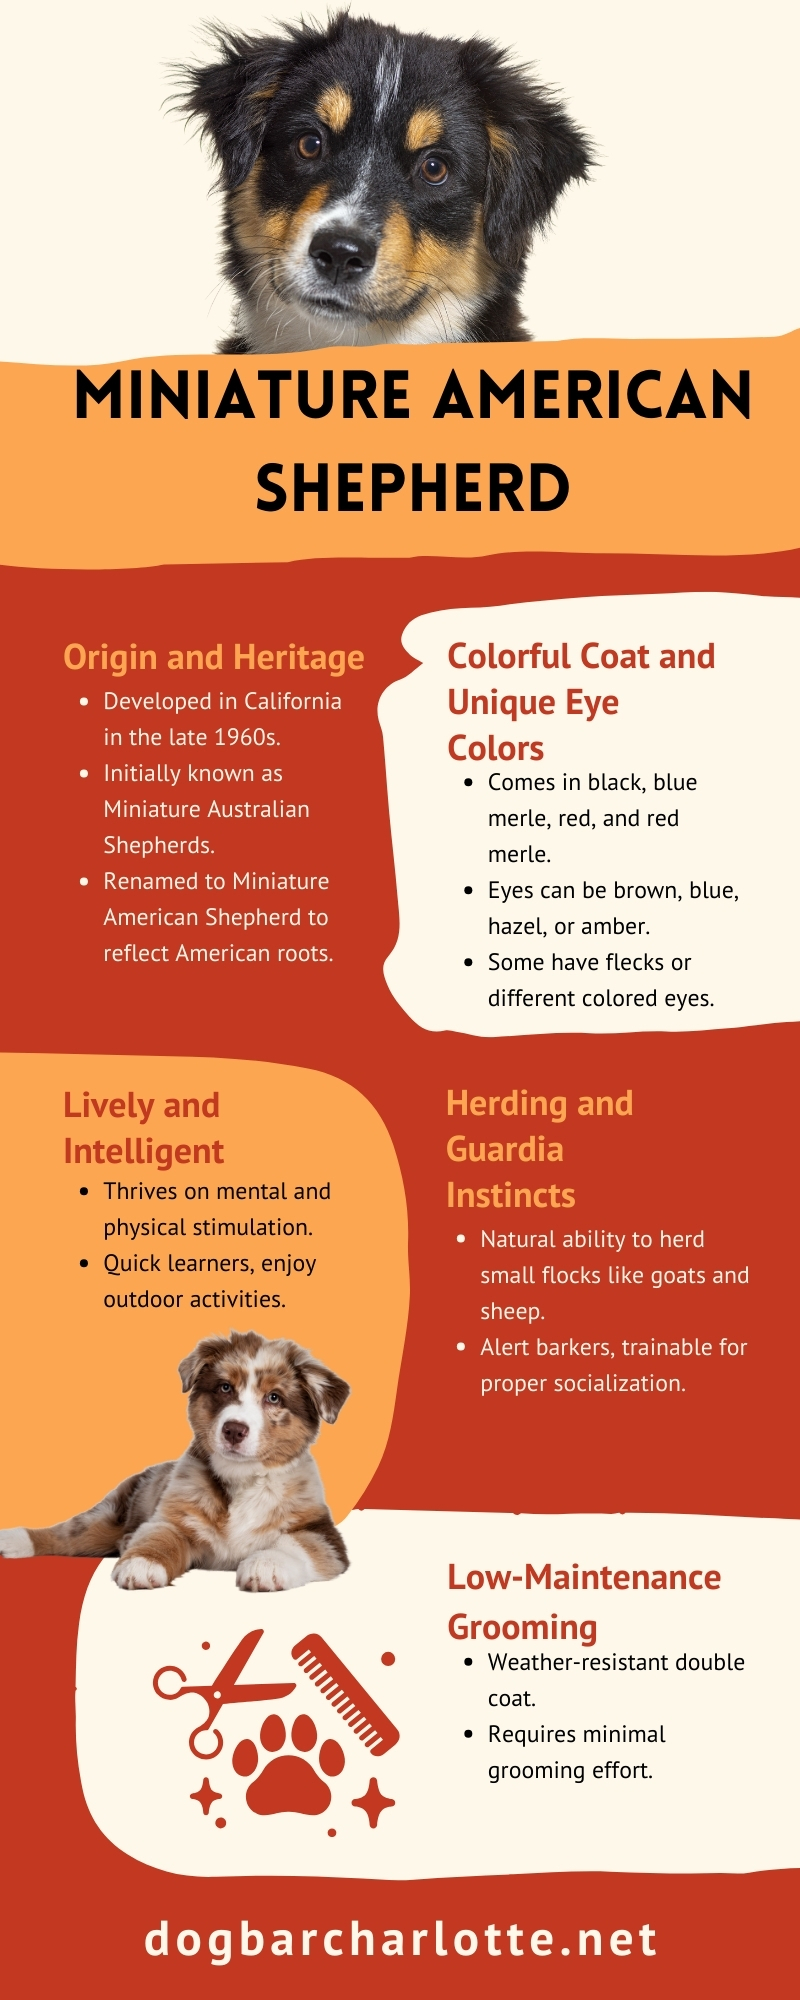 Miniature American Shepherd Facts Infographic